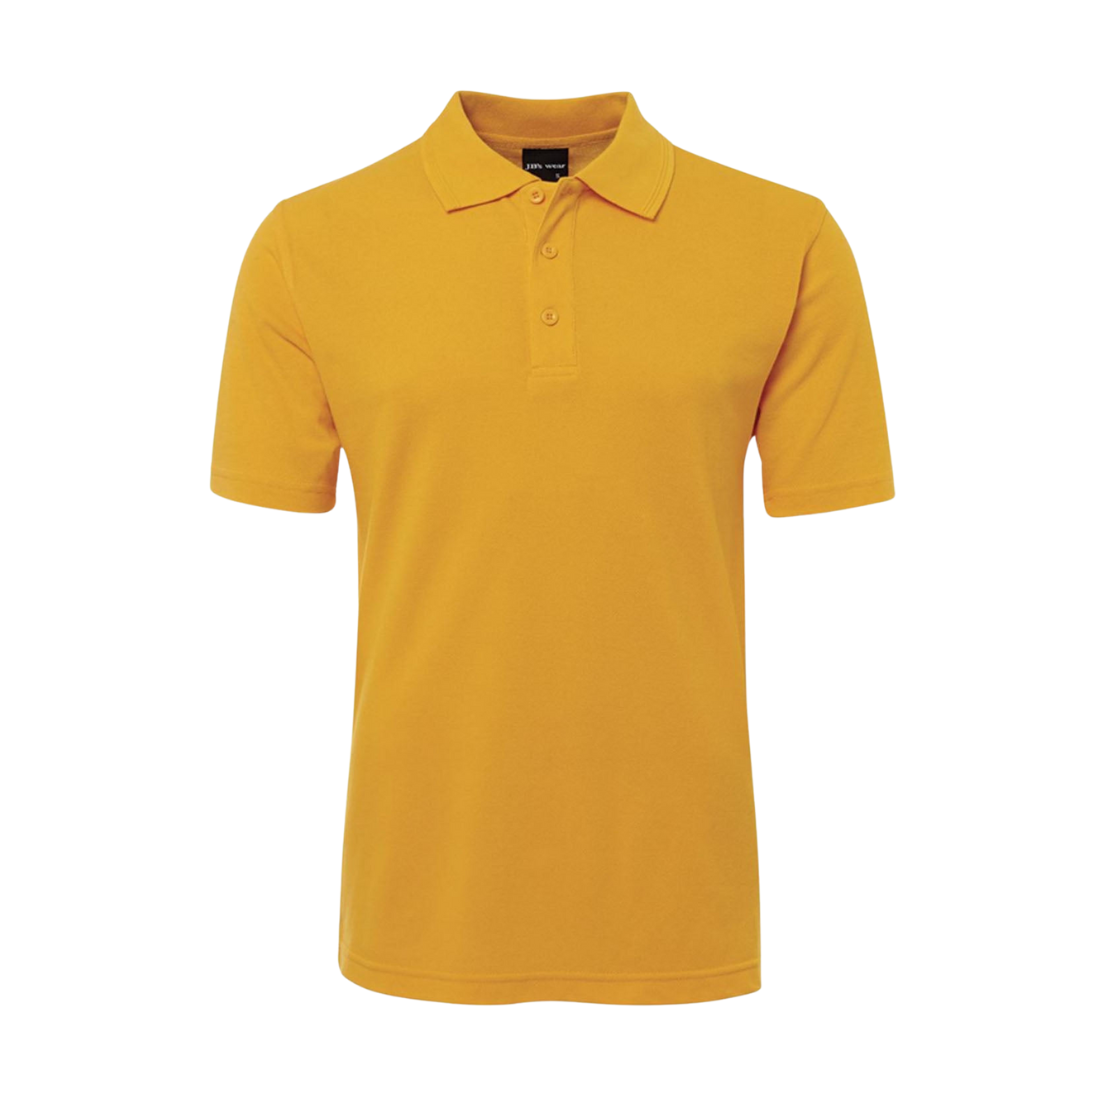 JBs Polo Shirt - No Pocket - ASSORTED COLOURS M Gold Mens Polo by JBs Wear | The Bloke Shop